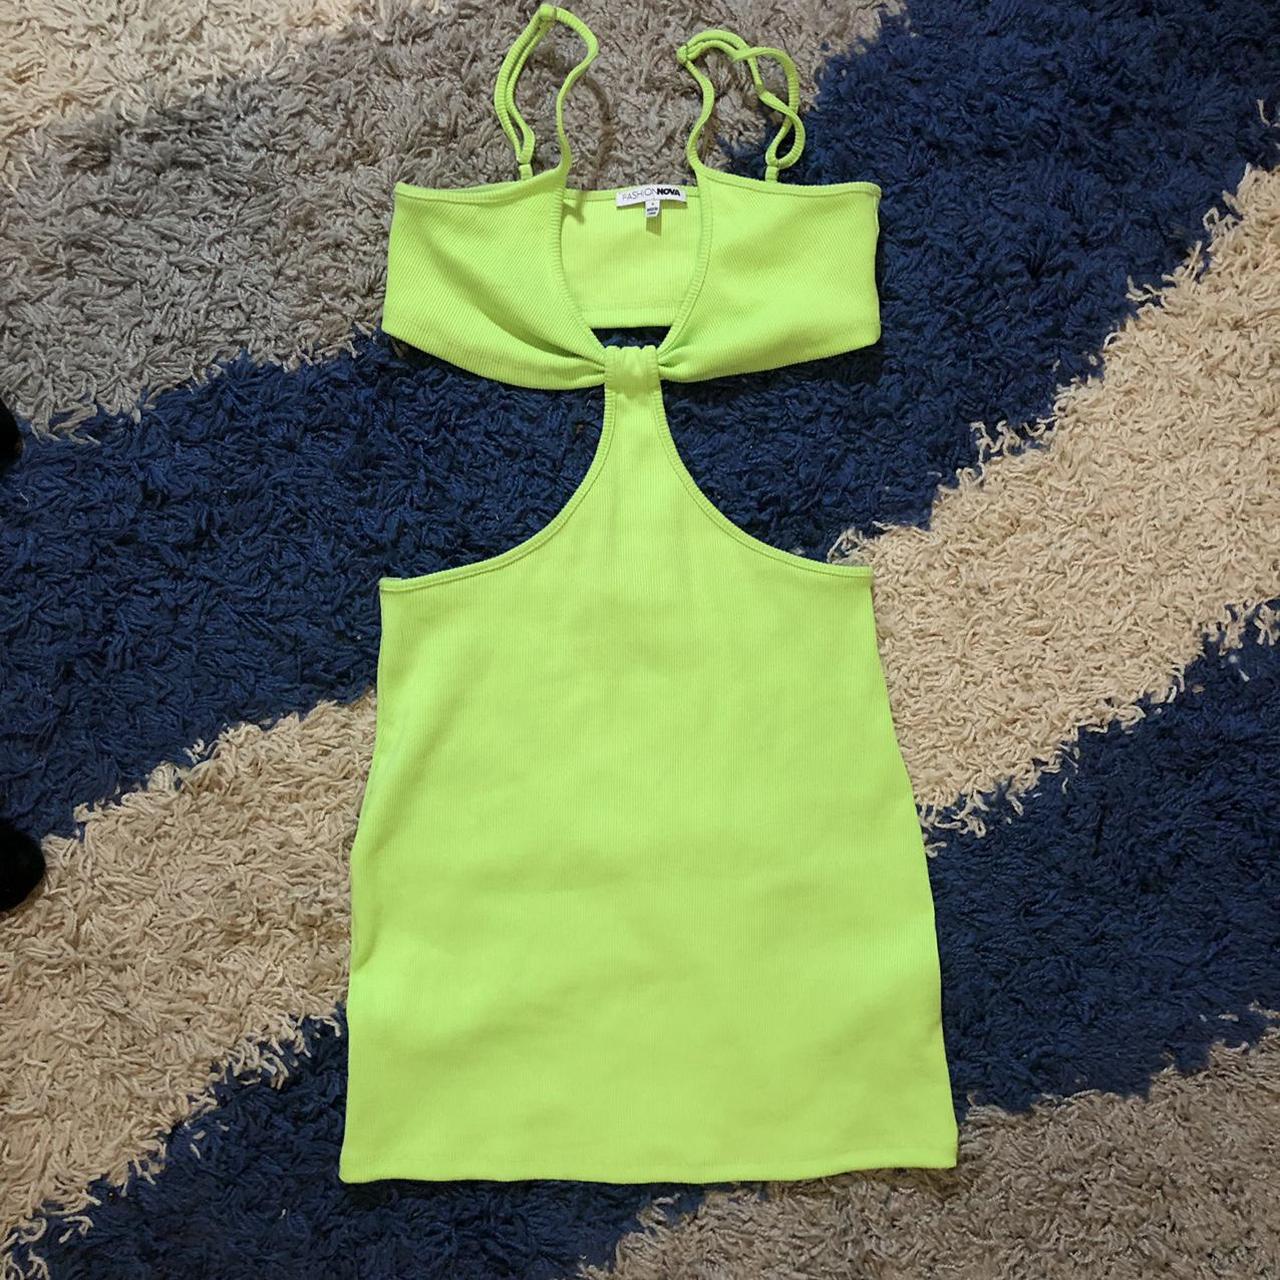 Product Image 1 - Cute green dress #dress #dresses